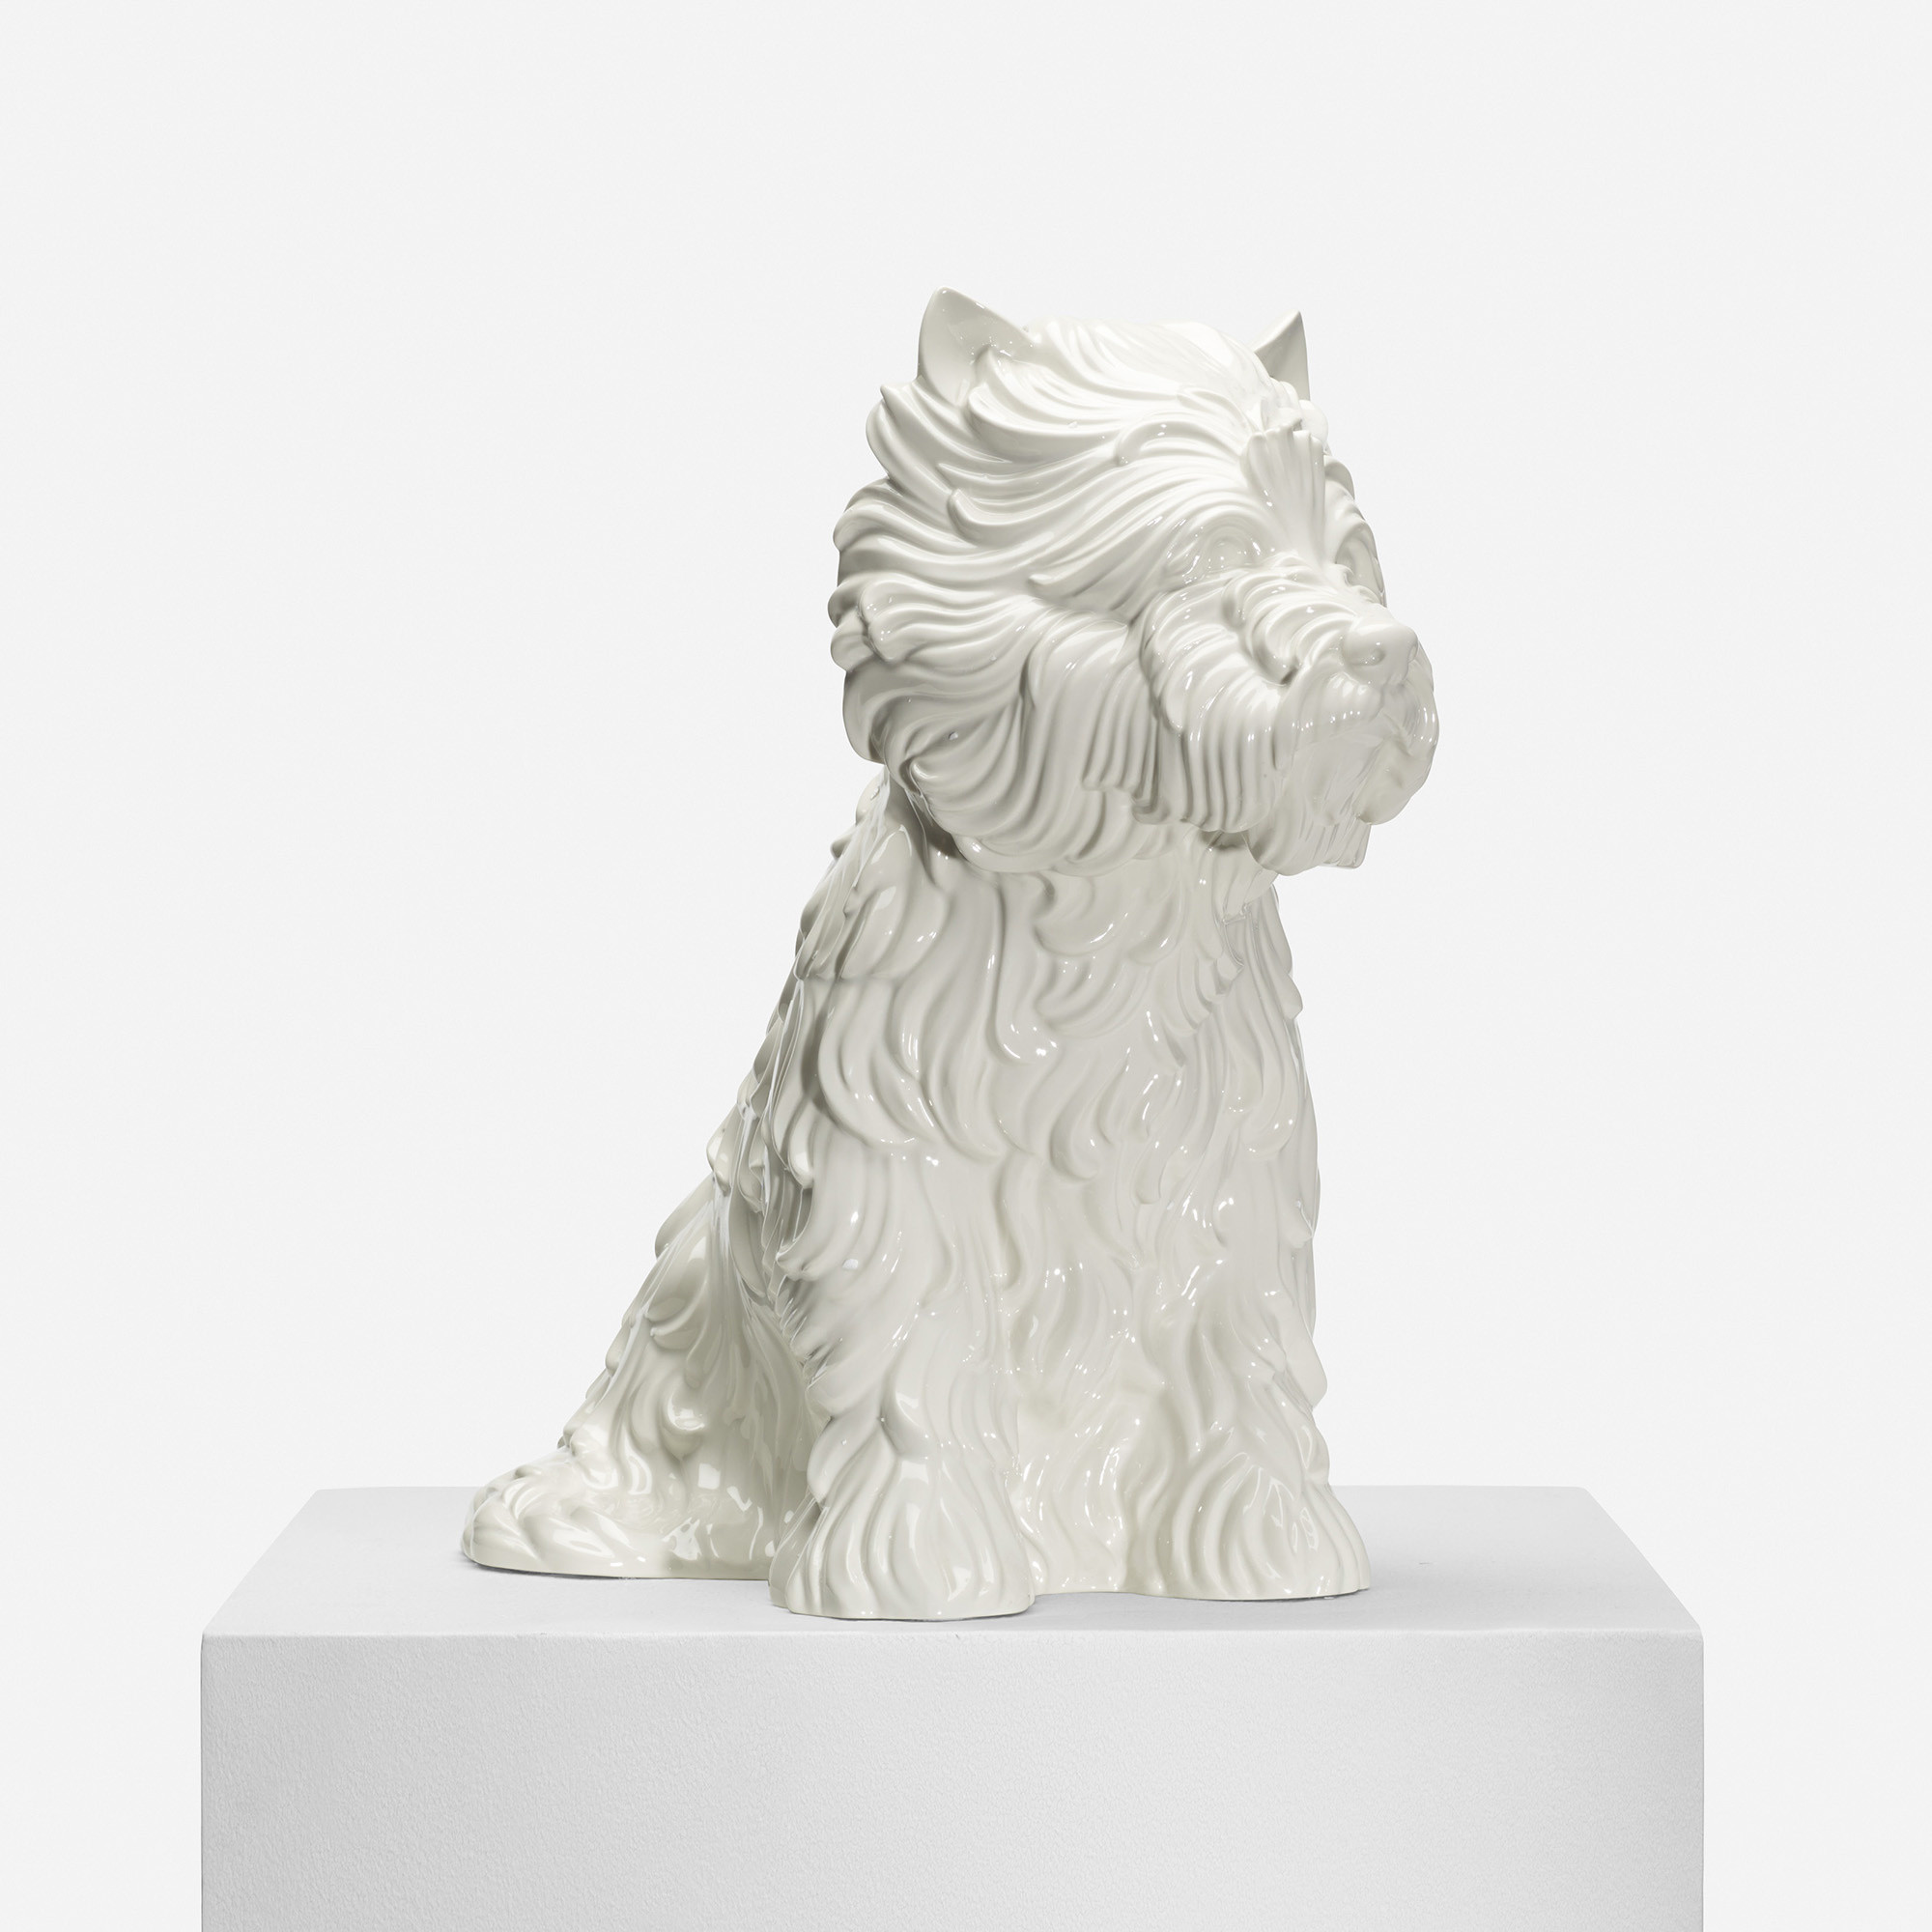 18 Stylish Jeff Koons Puppy Vase Price 2024 free download jeff koons puppy vase price of 176 jeff koons puppy vase design 12 june 2014 auctions with 176 jeff koons puppy vase 1 of 3